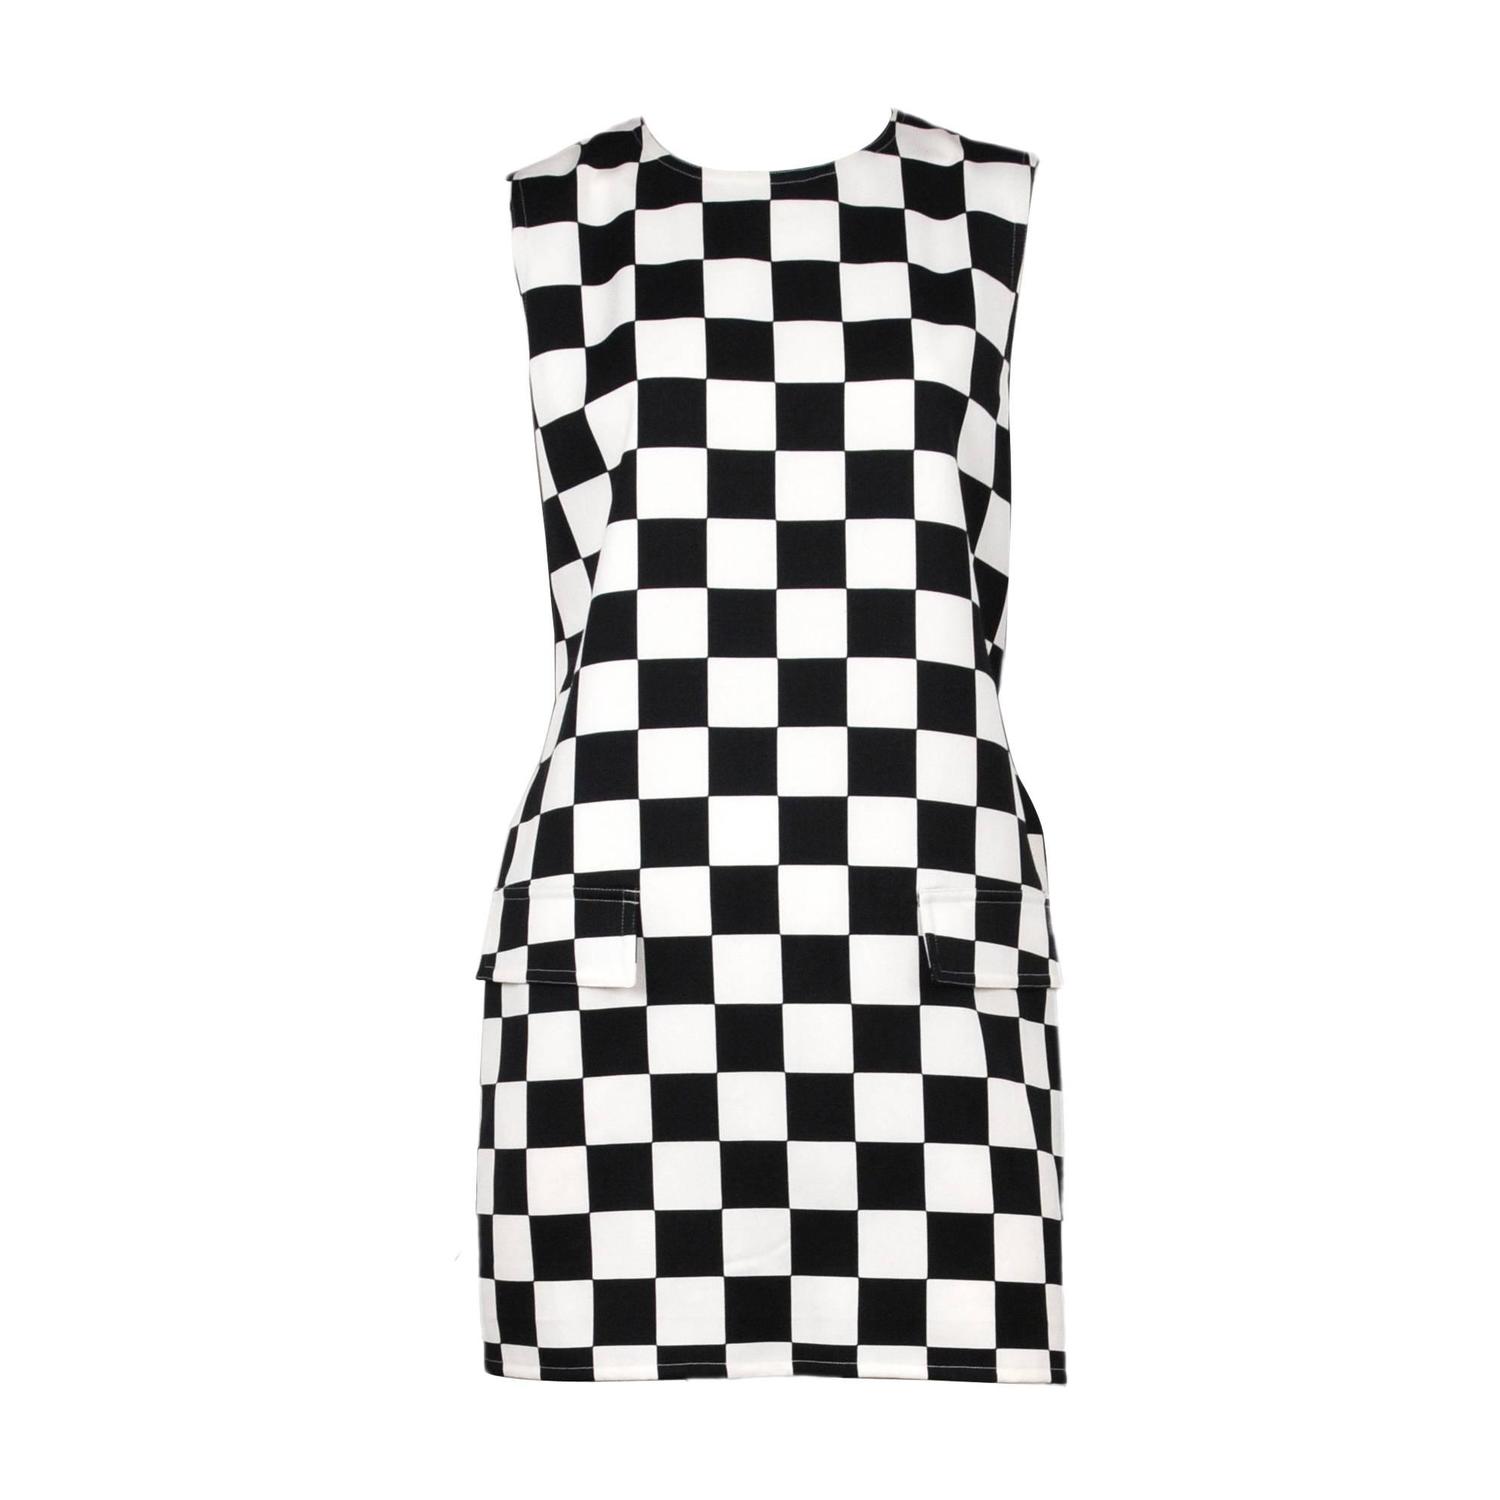 Gianni Versace Checkered Dress at 1stdibs